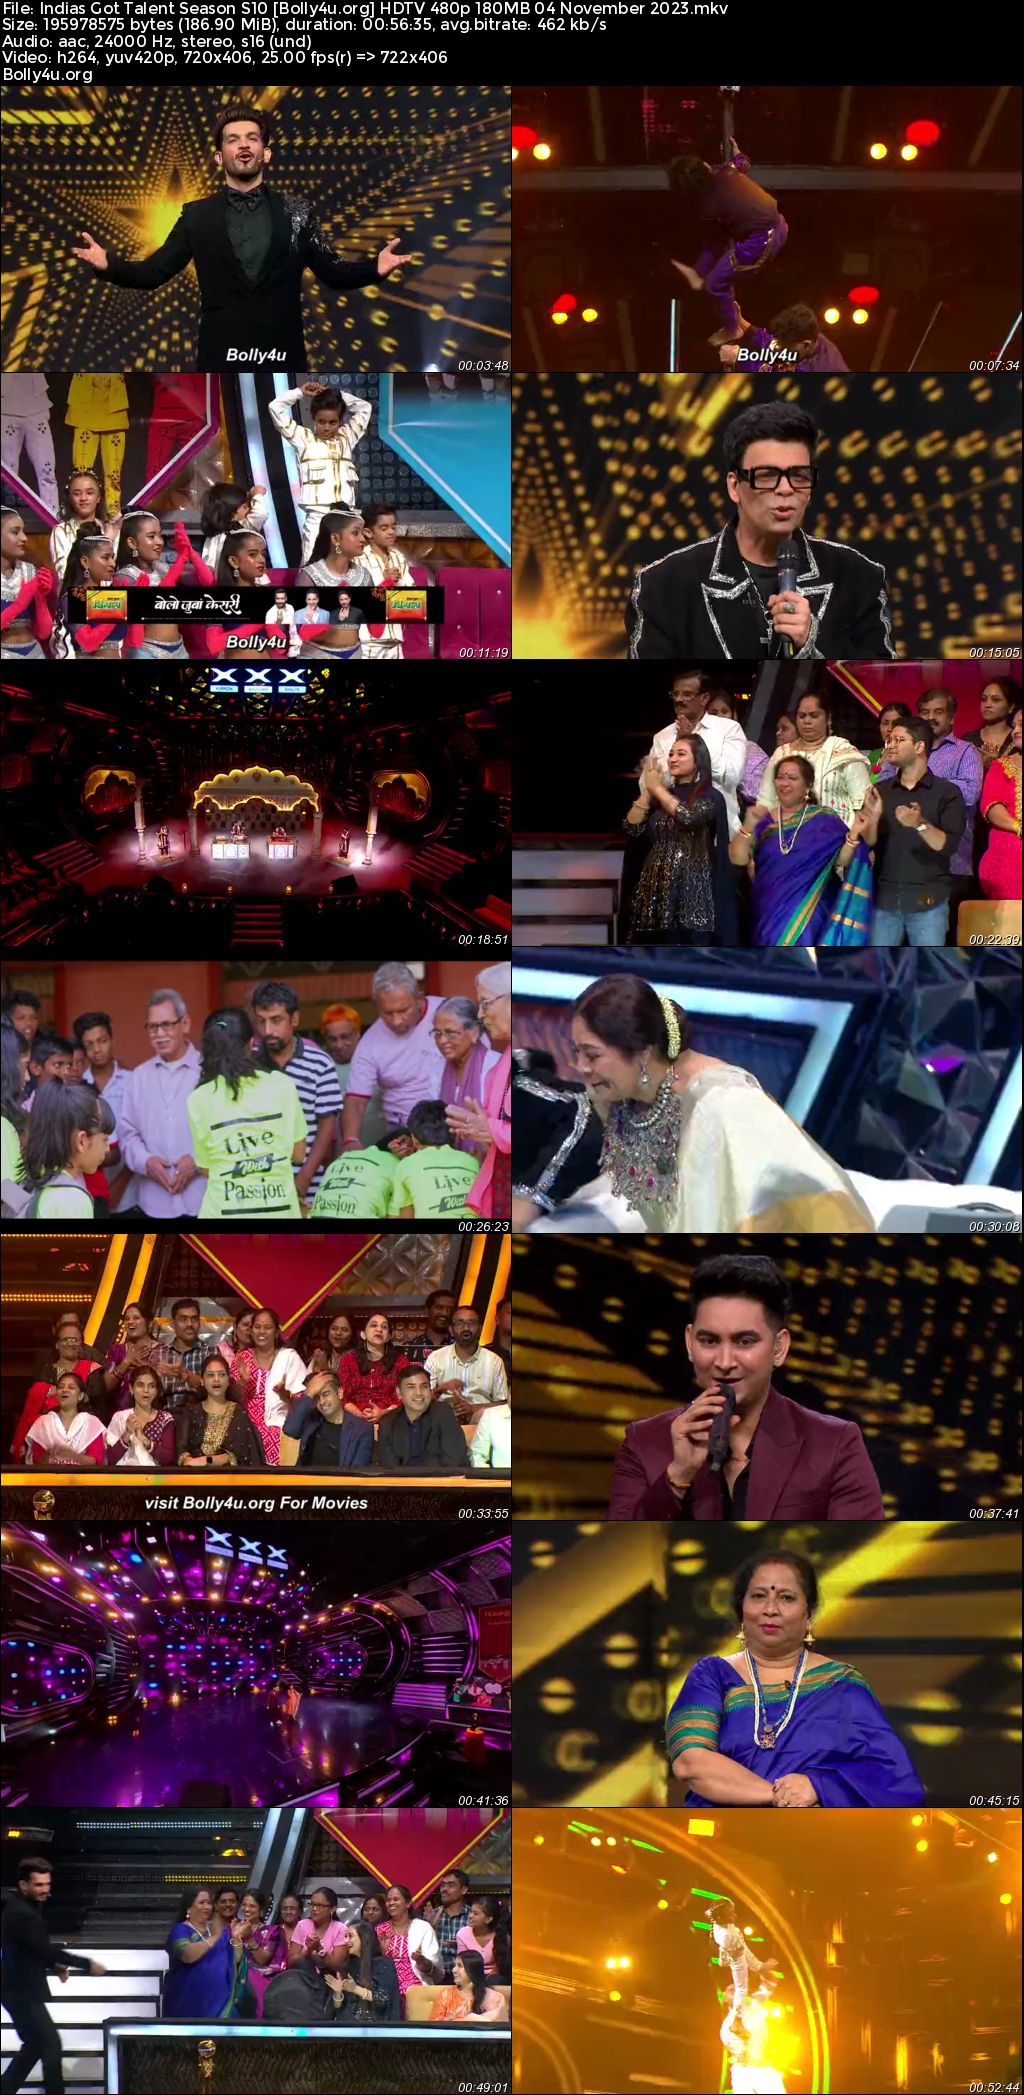 Indias Got Talent Season S10 HDTV 480p 180MB 04 November 2023 Download